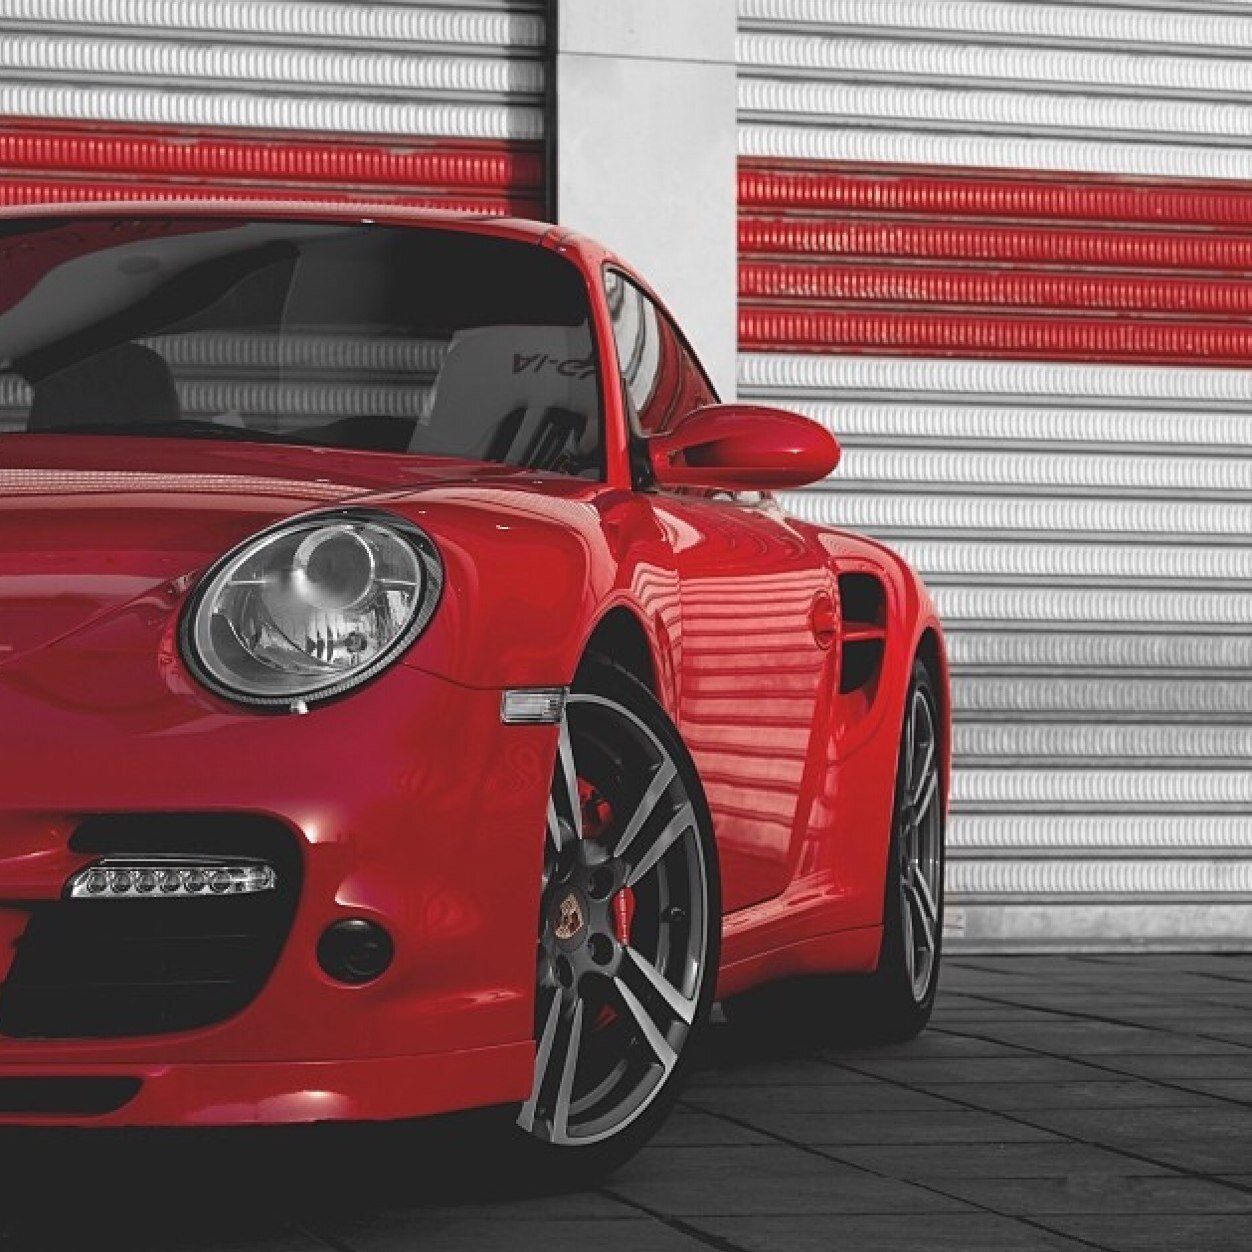 PorschePics™